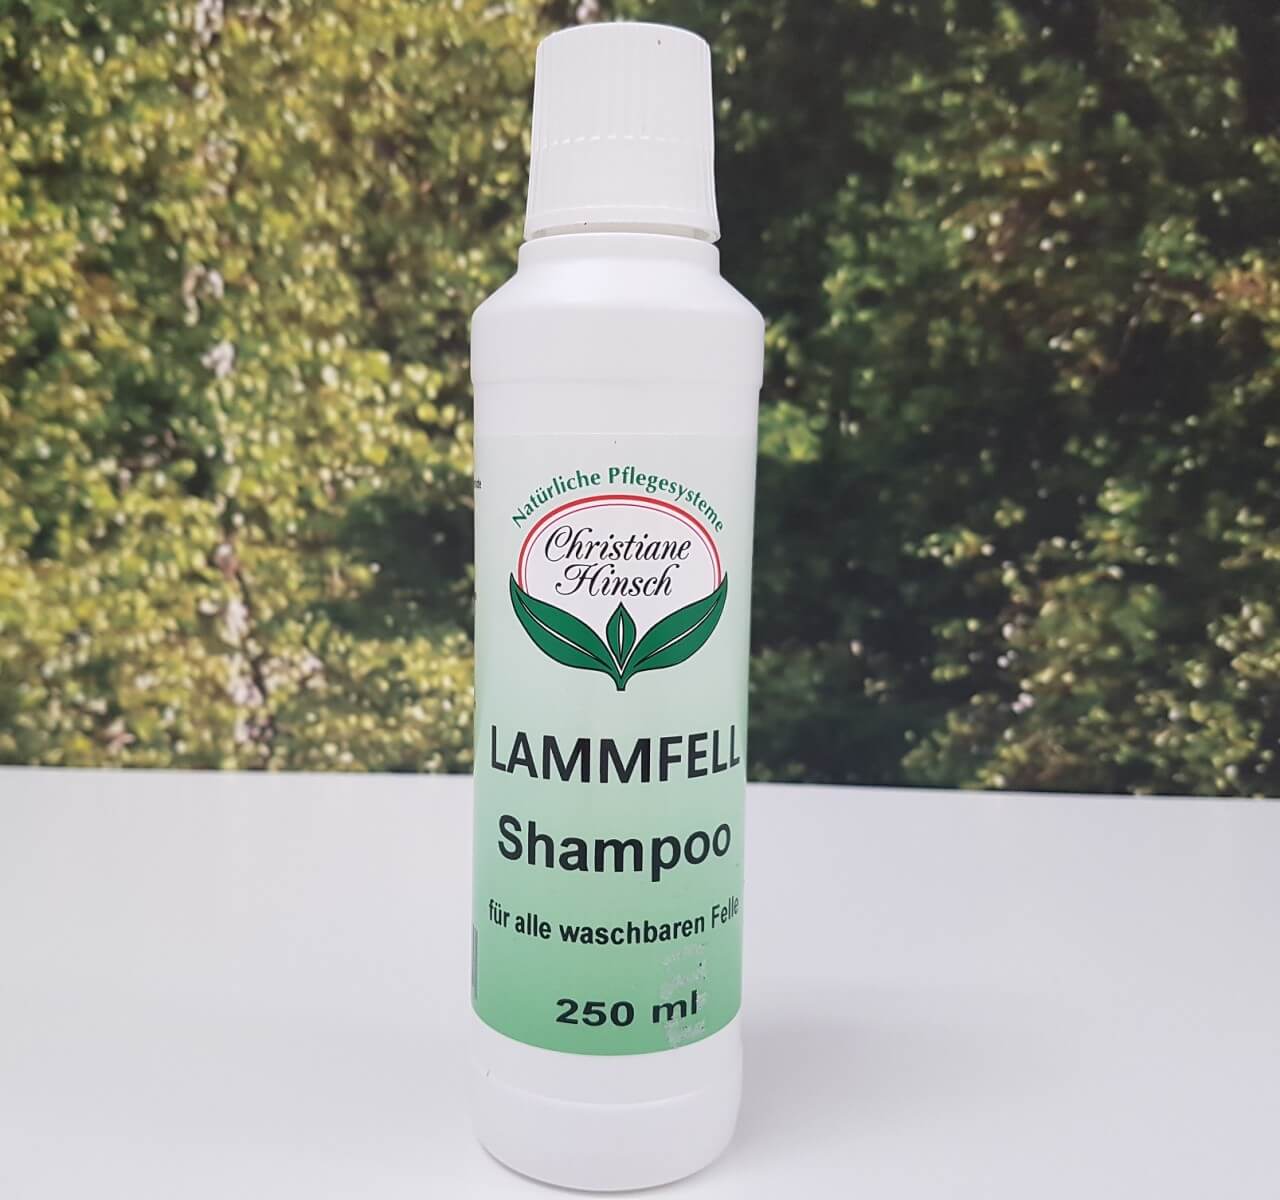 Lammfell Shampoo 250 ml